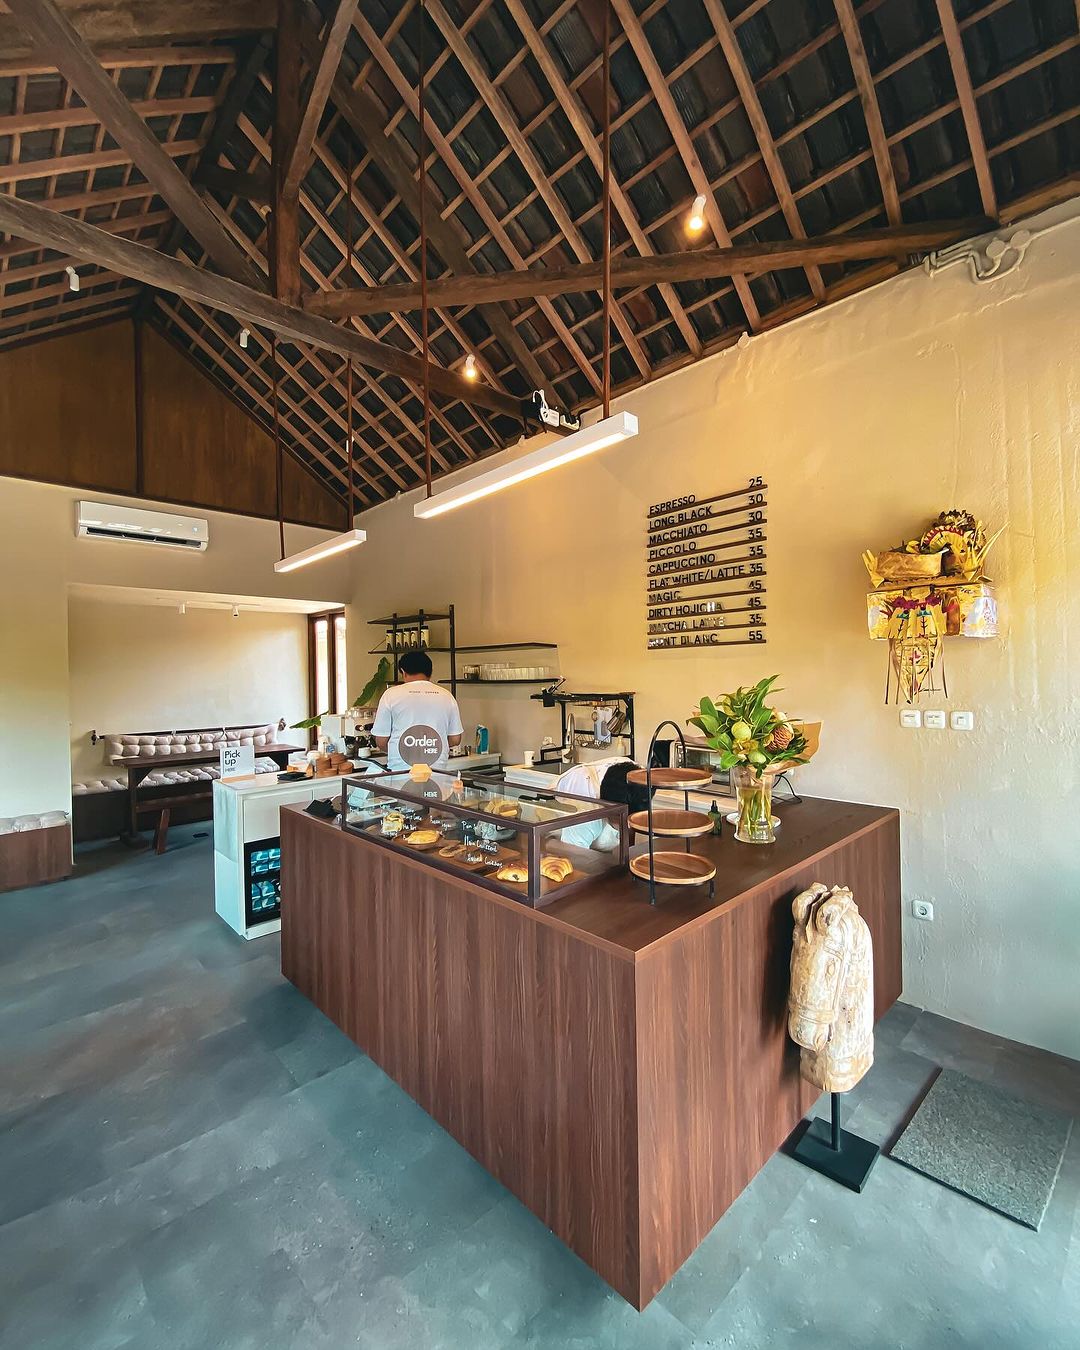 Lokasi Picco Coffee Bali Image From @gallery_made_ar